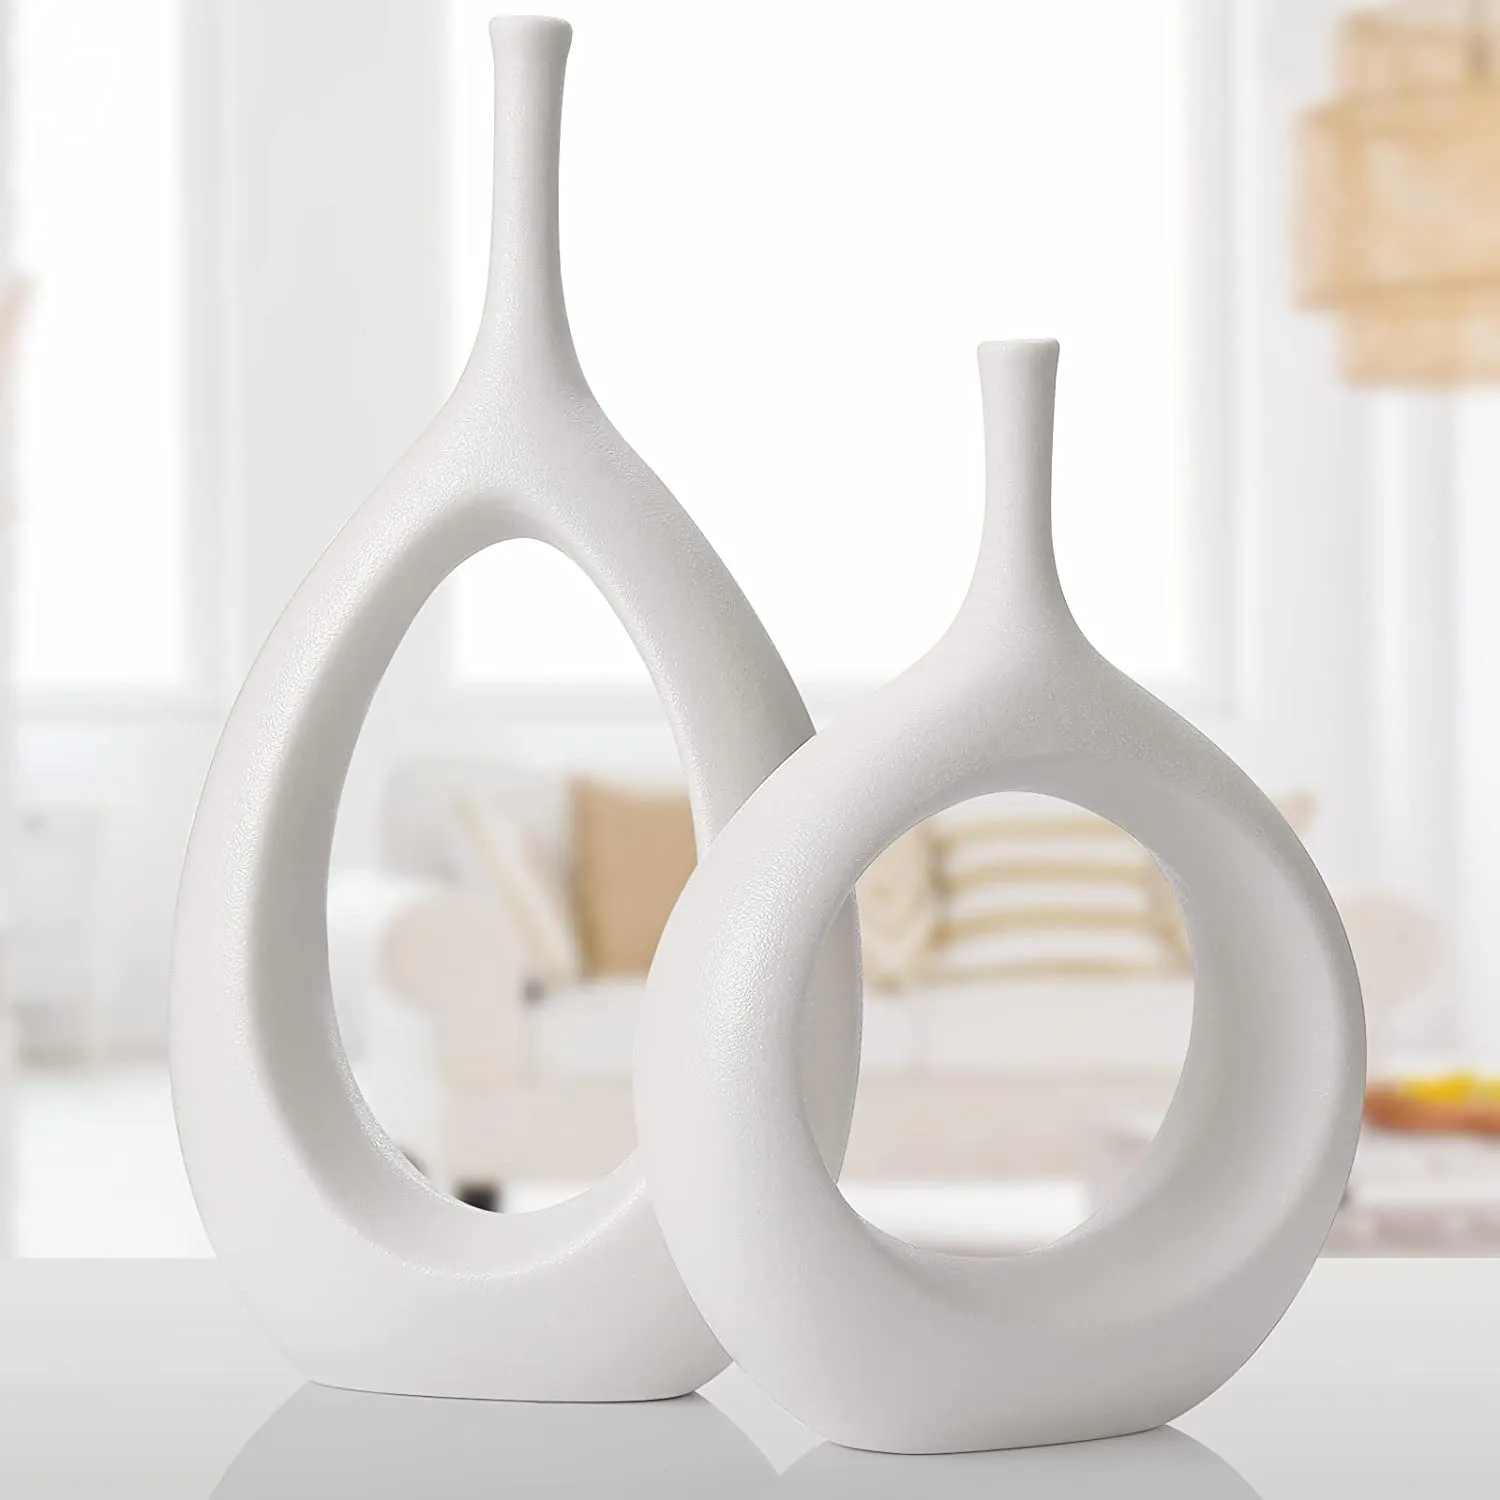 White Ceramic Hollow Vases Set of 2 Decor Modern Decorative Vase Centerpiece for Wedding Dinner Table Party Living Room Office Bedroom, Housewarming